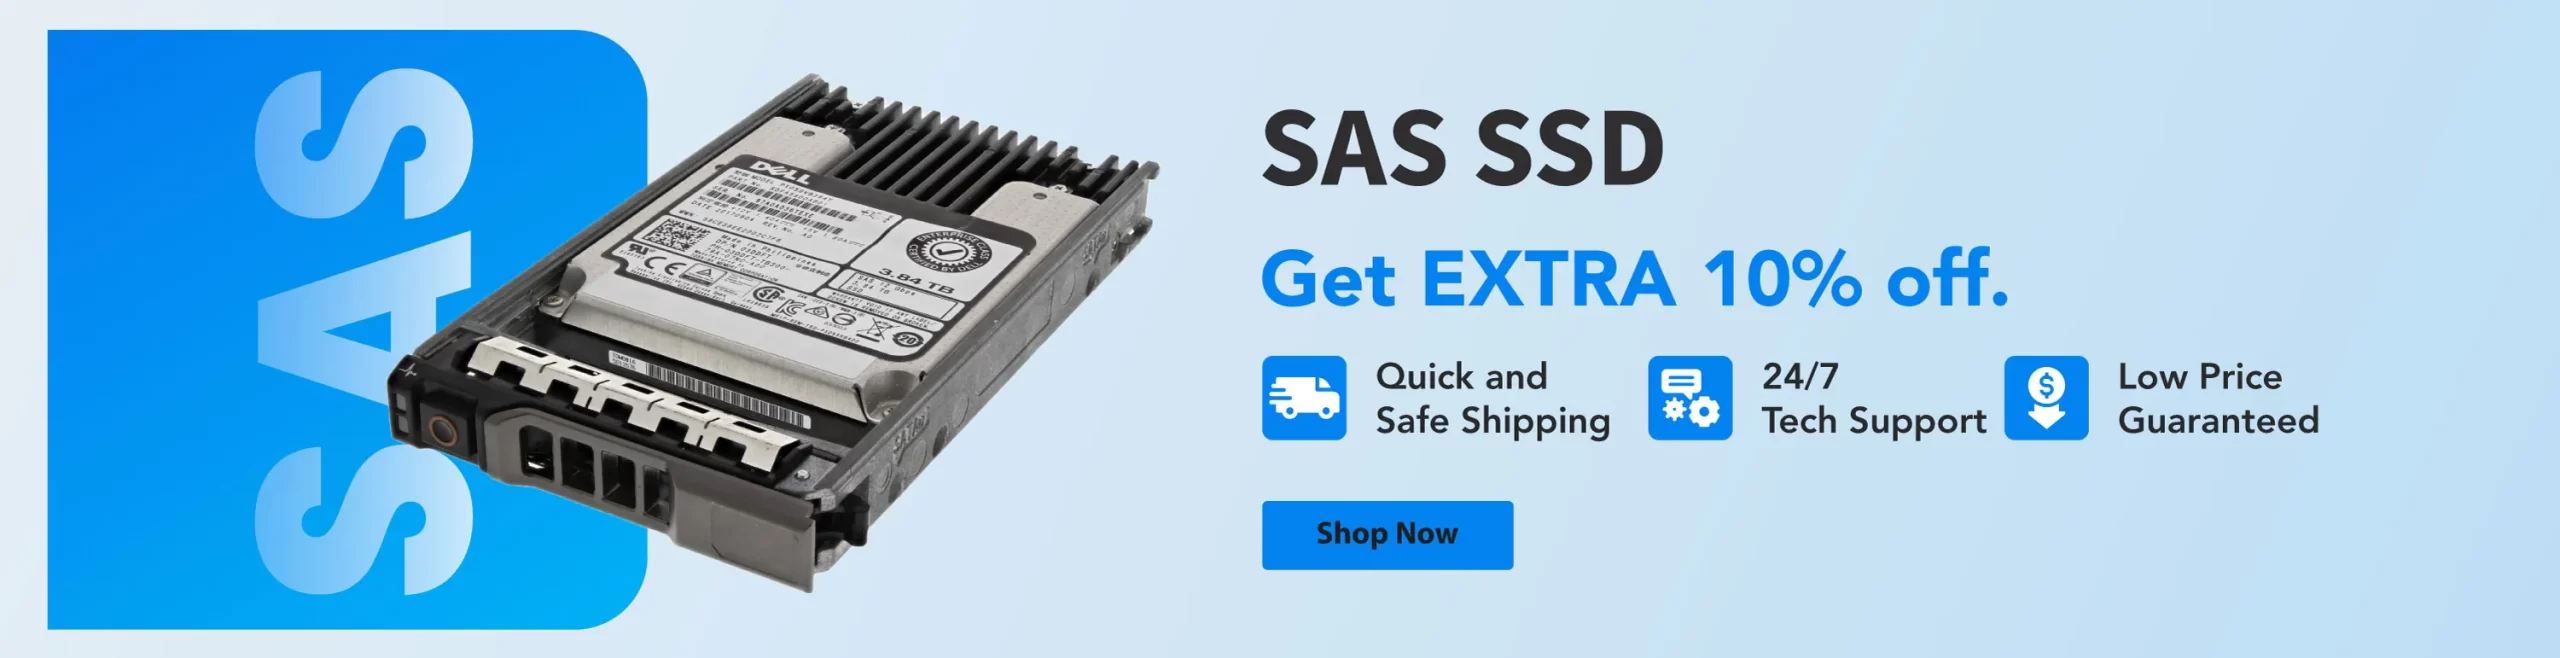 SAS SSD Offers